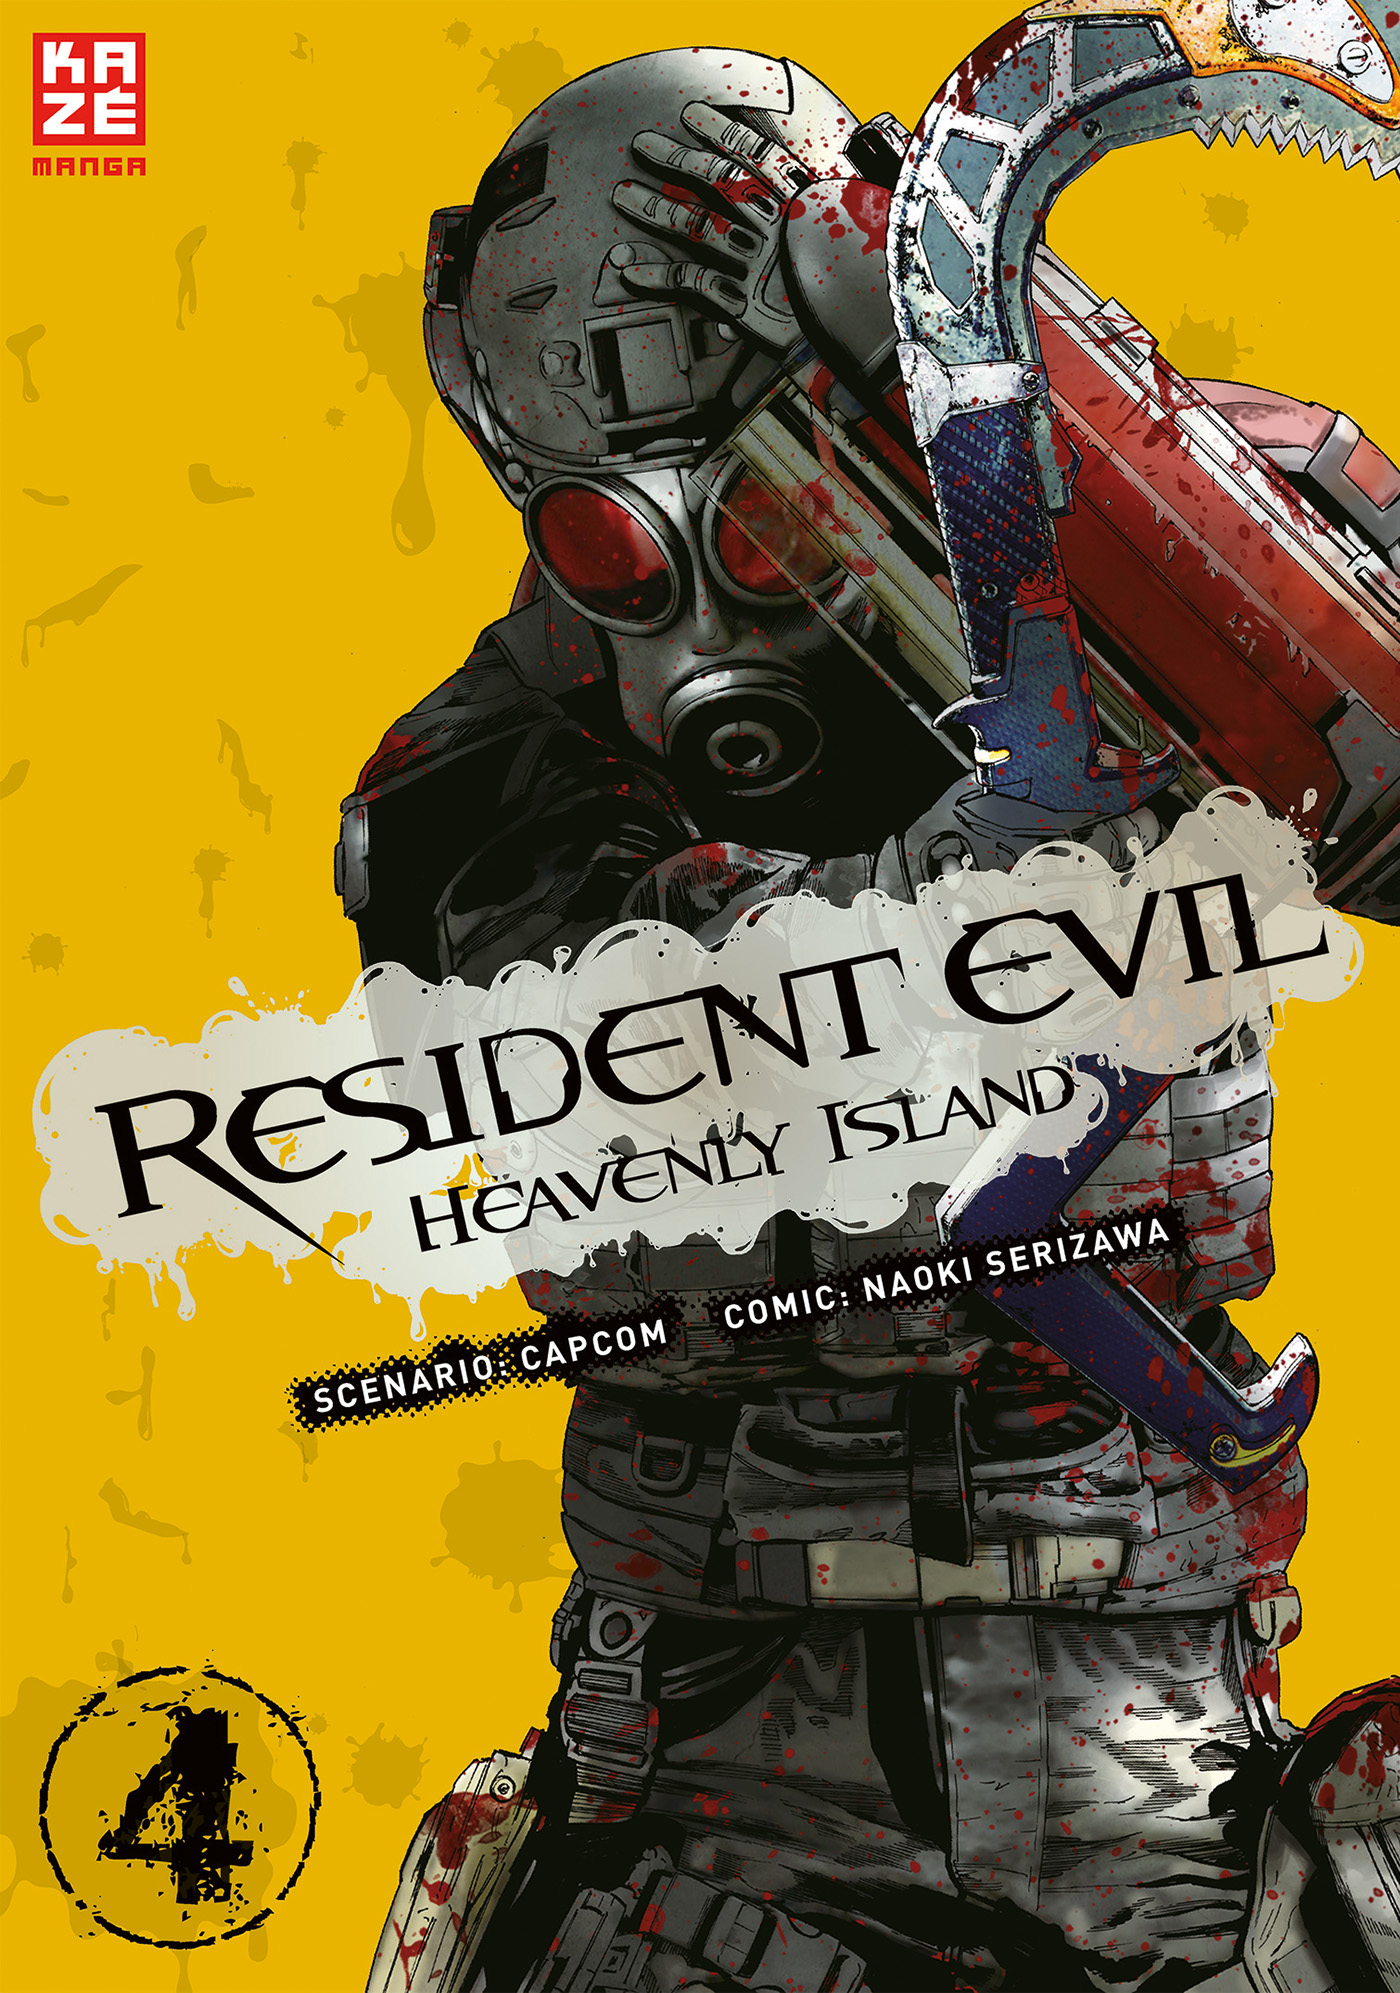 Band Heavenly – Resident – Island 4 Evil